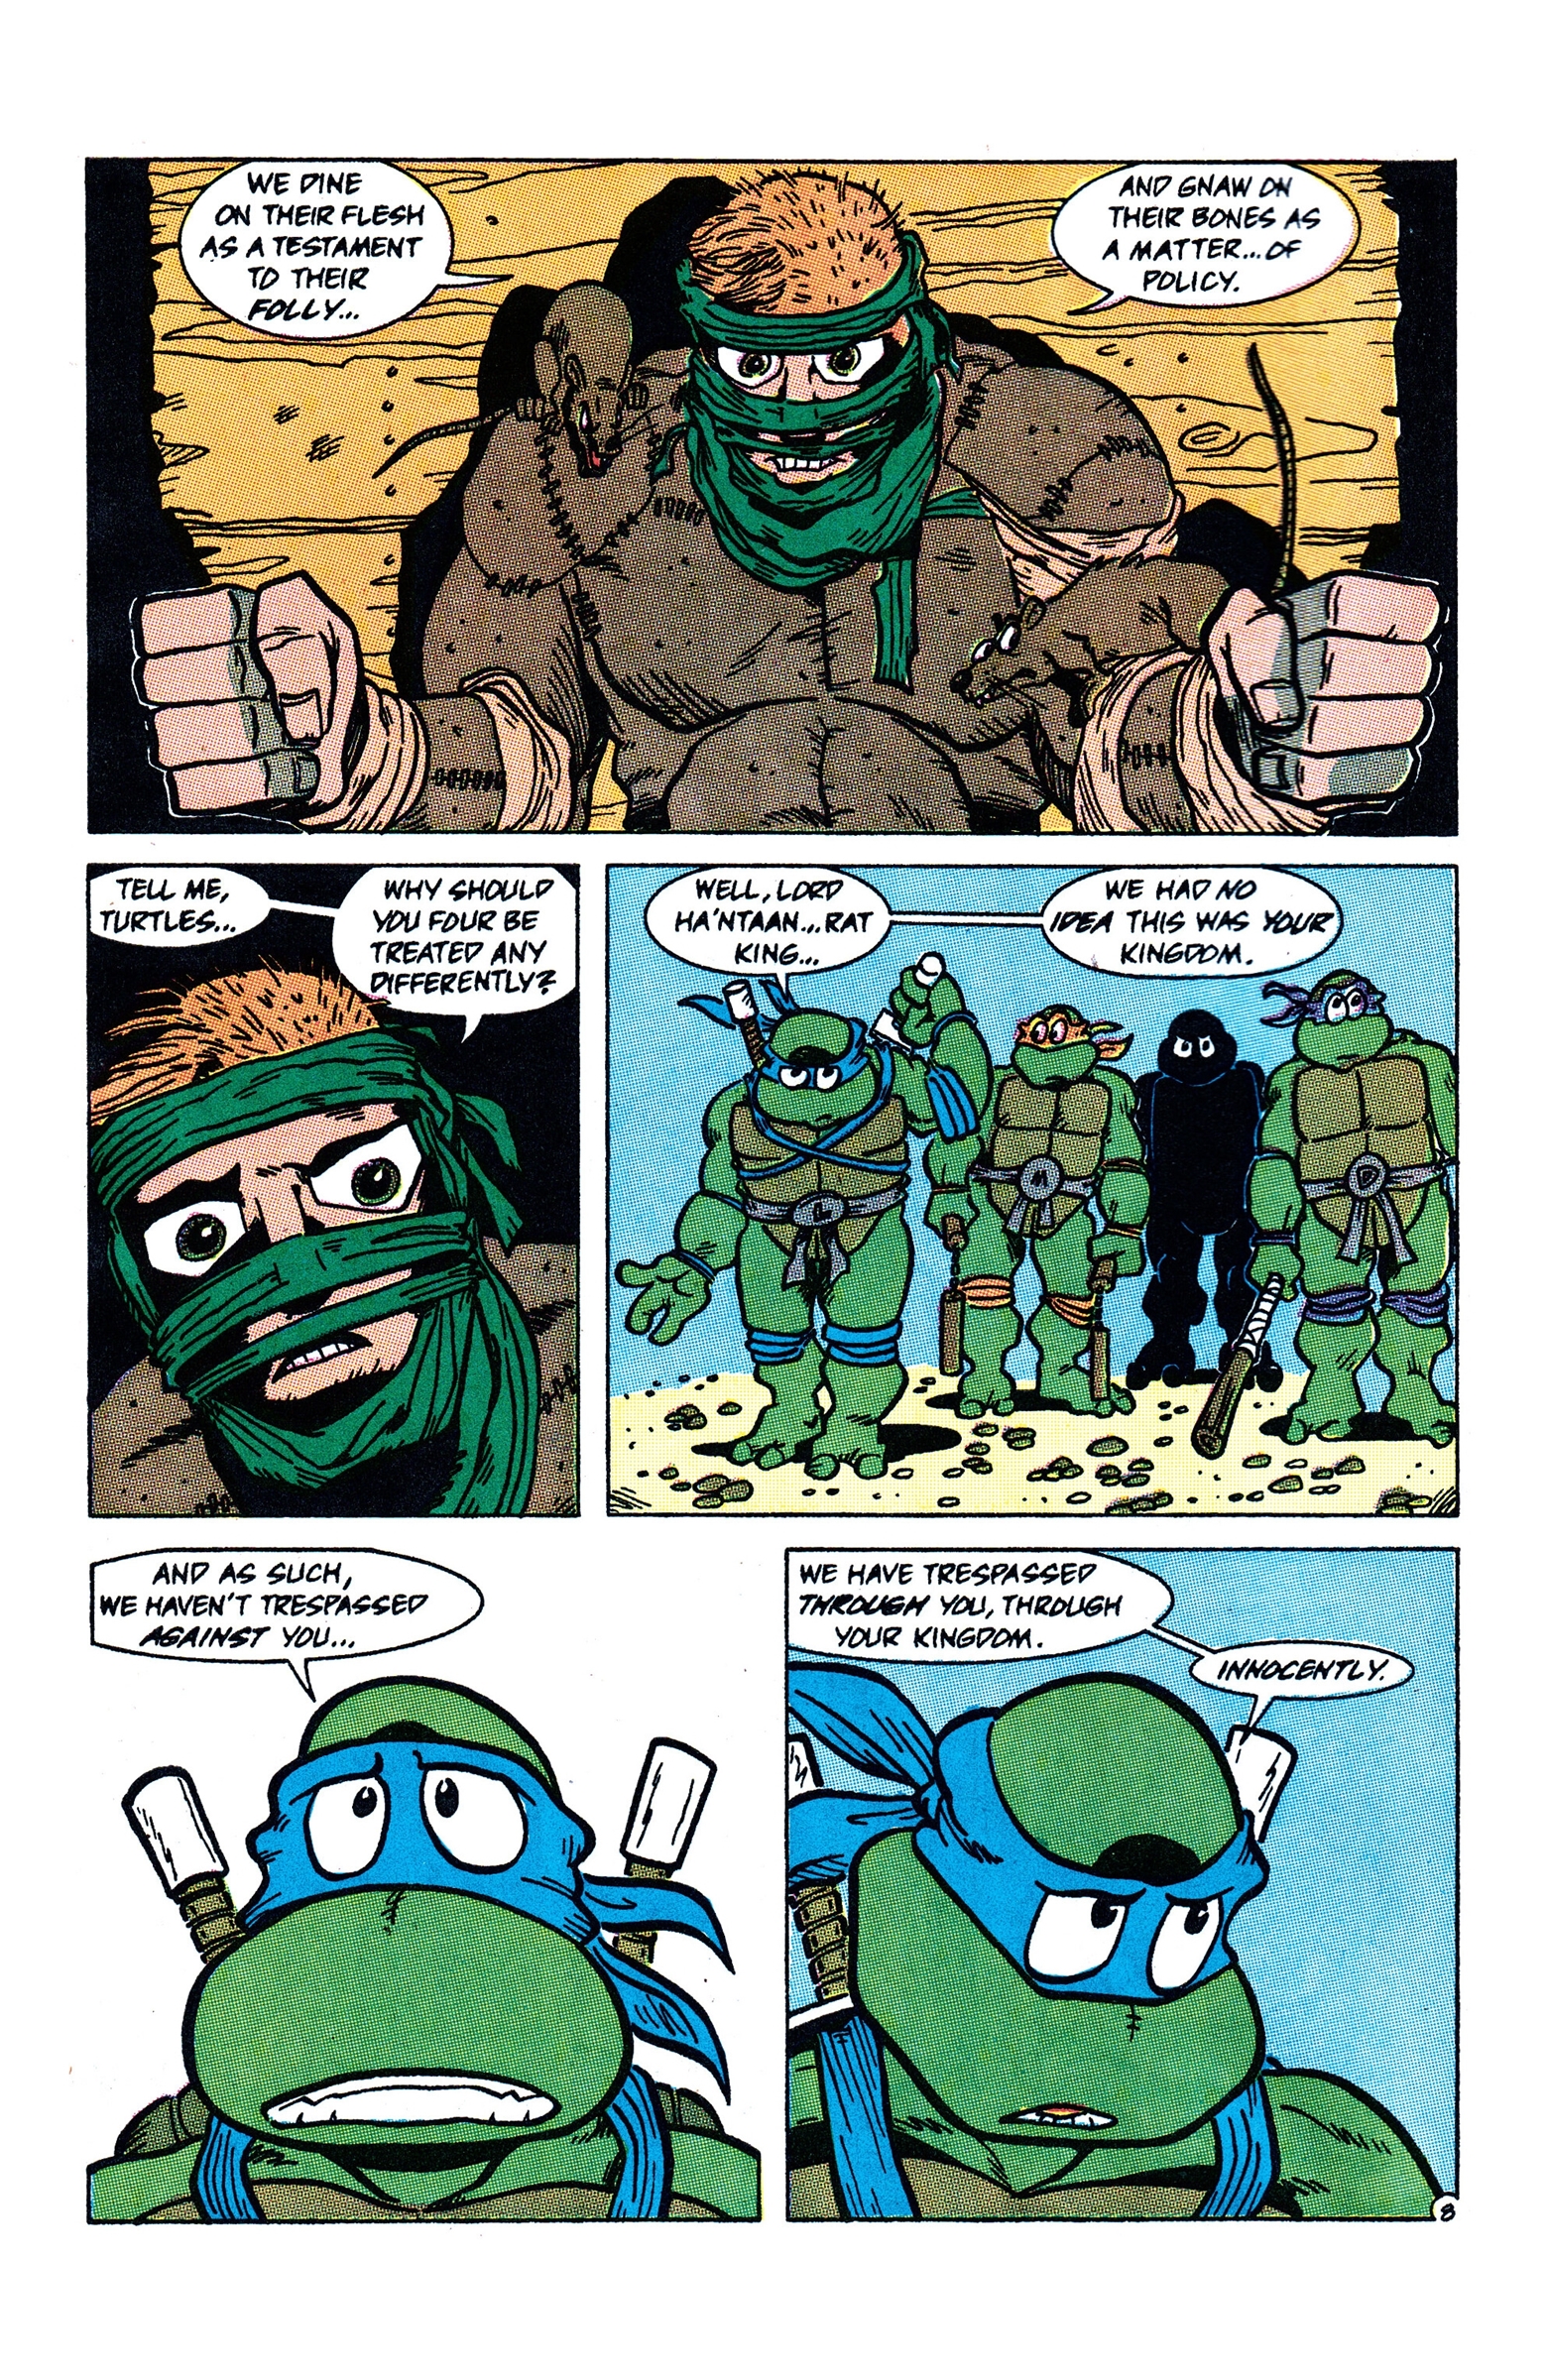 Ha'ntaan as Rat King (TMNT) - Archie Comics